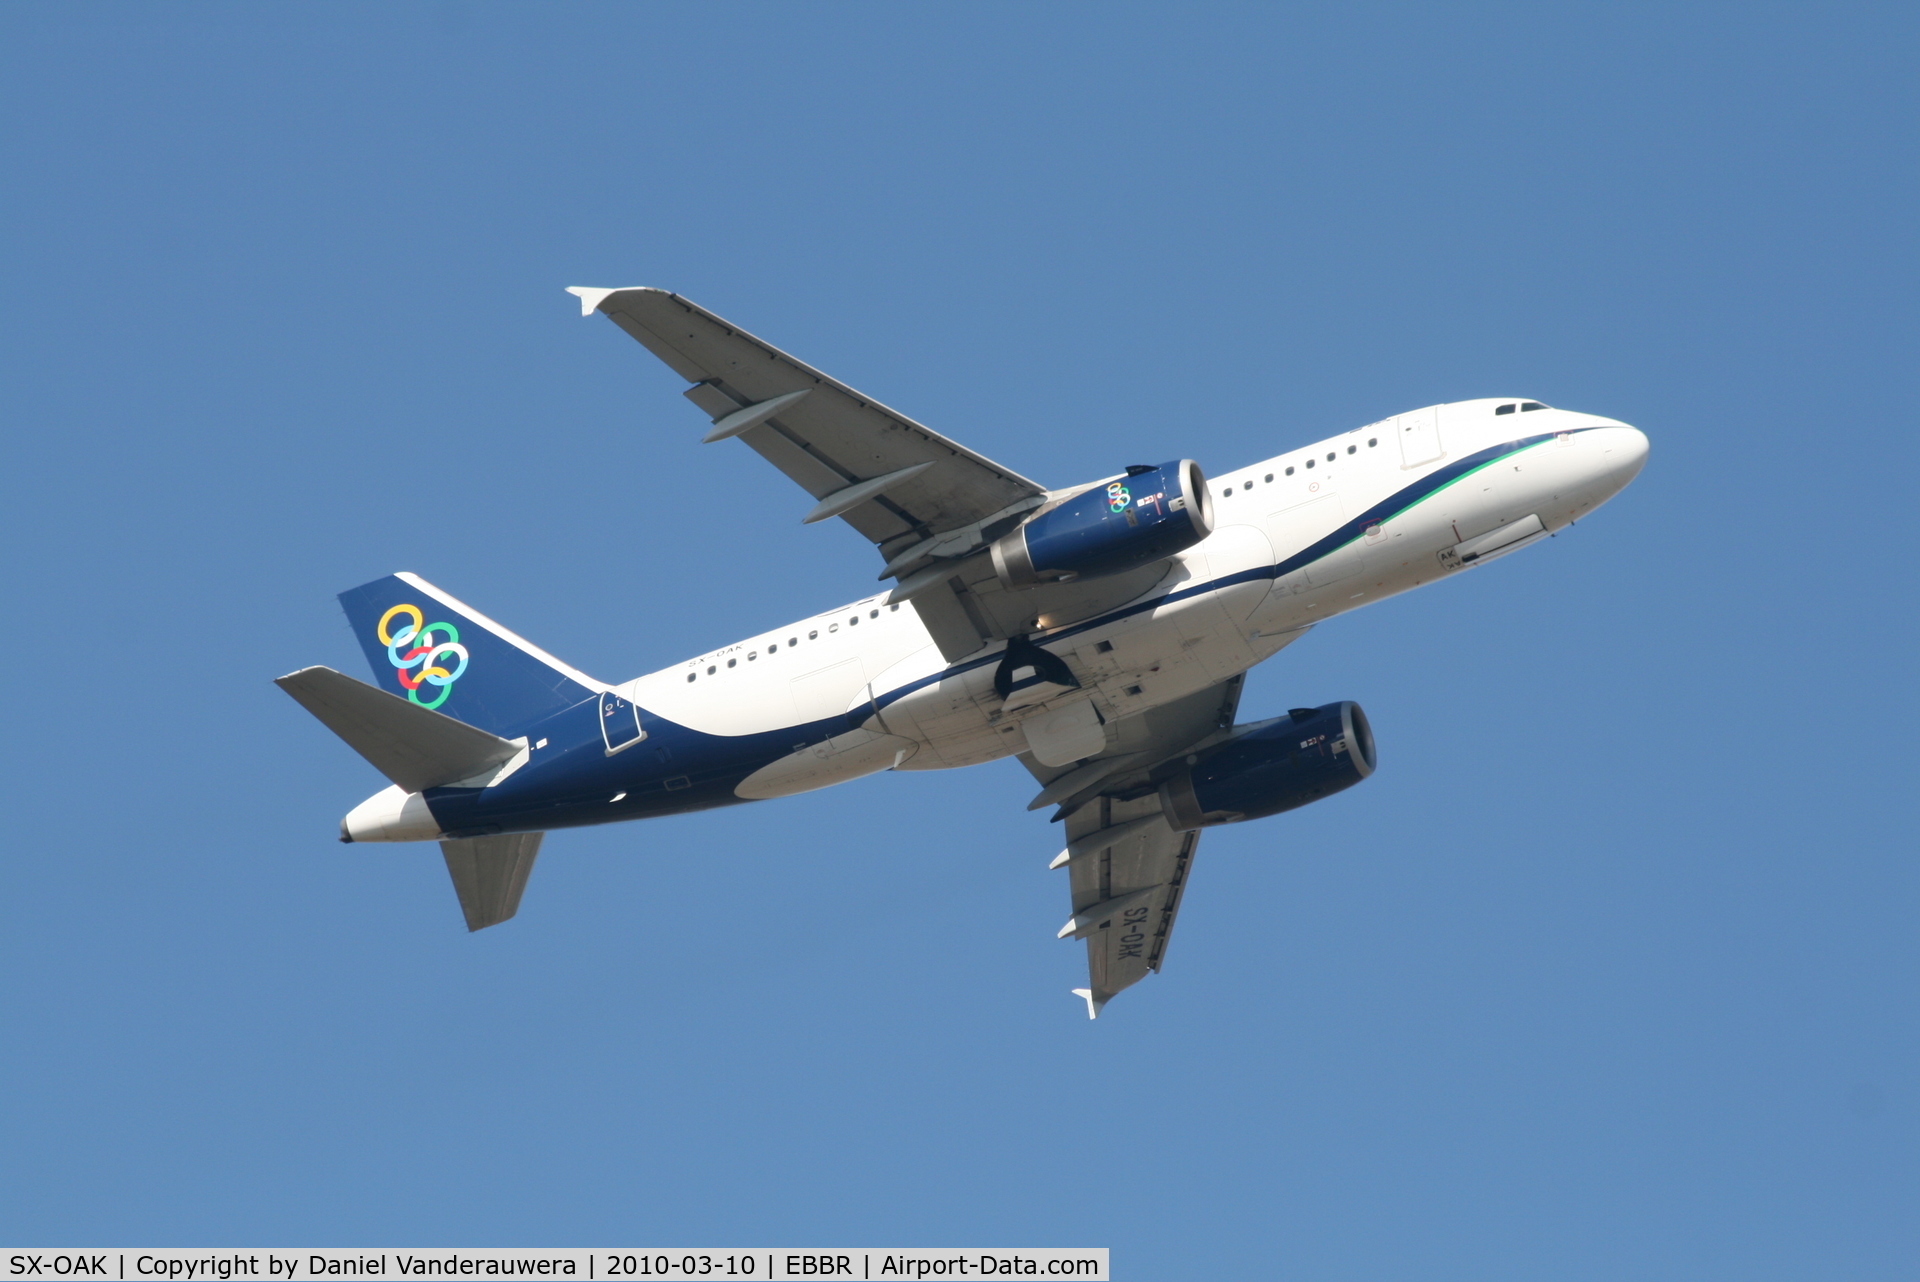 SX-OAK, 2007 Airbus A319-132 C/N 3317, Flight OA146 is climbing from RWY 07R